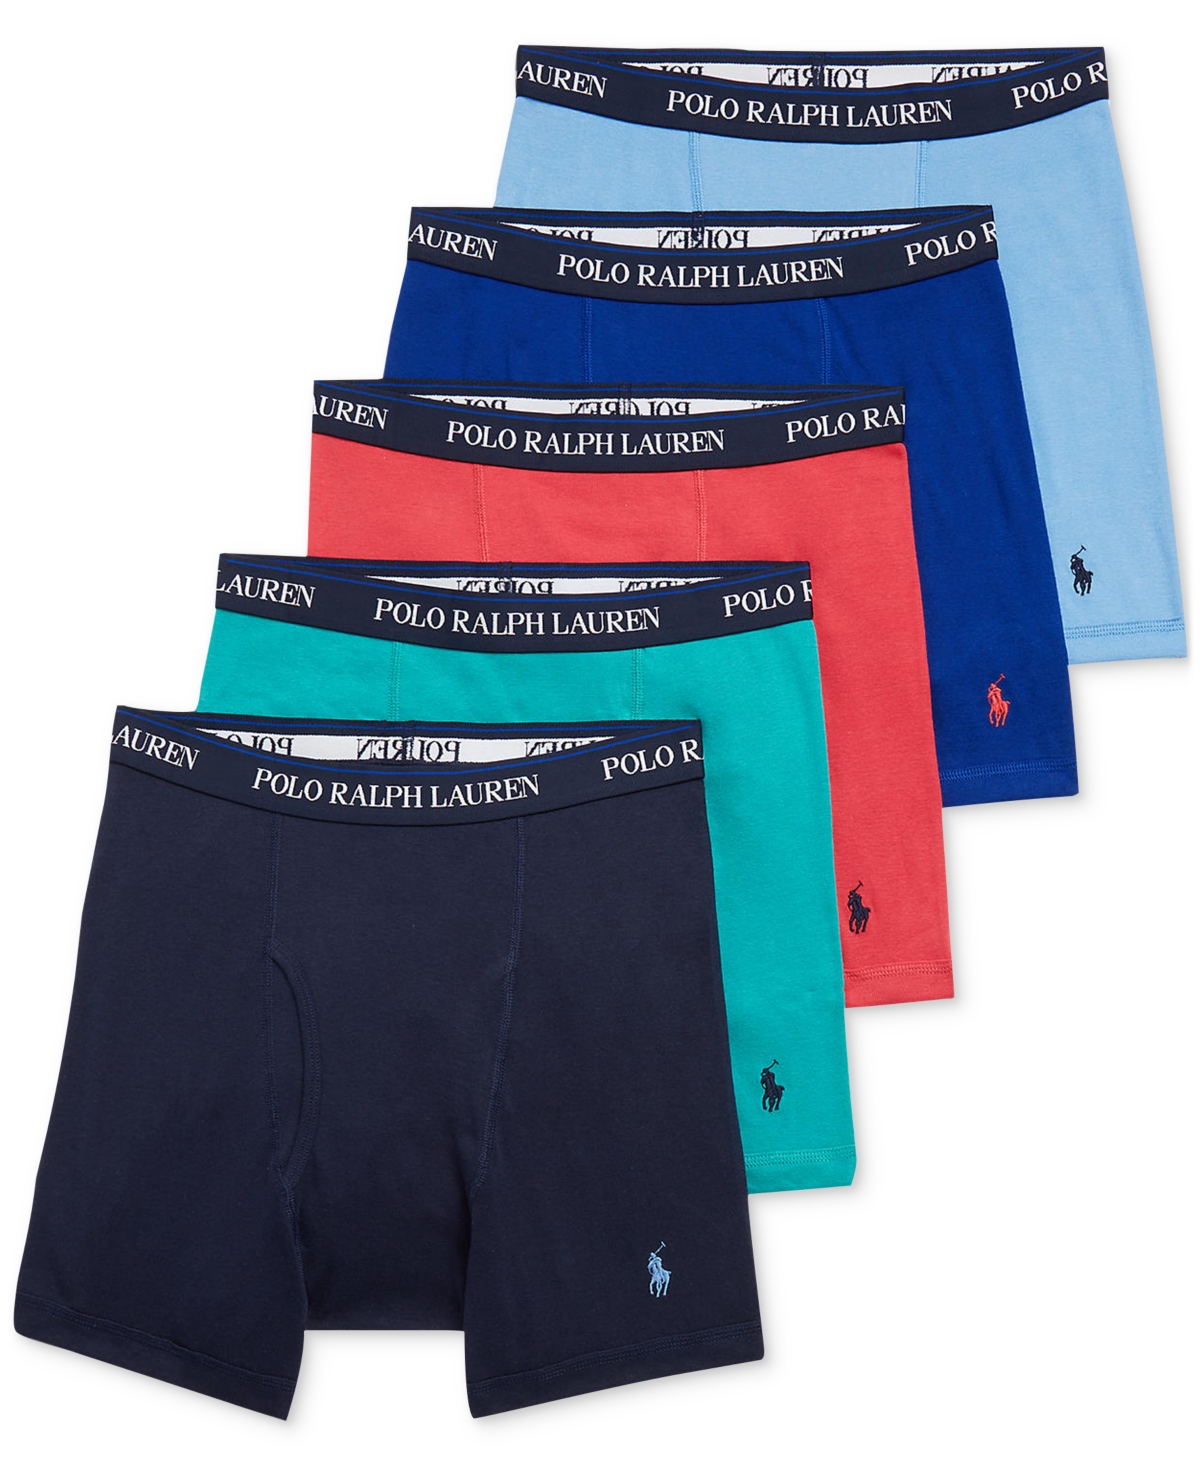 Polo Ralph Lauren Men's 5-pk. Classic-fit Cotton Boxer Briefs In Cruise Navy,western Turquoise,sunrise Re